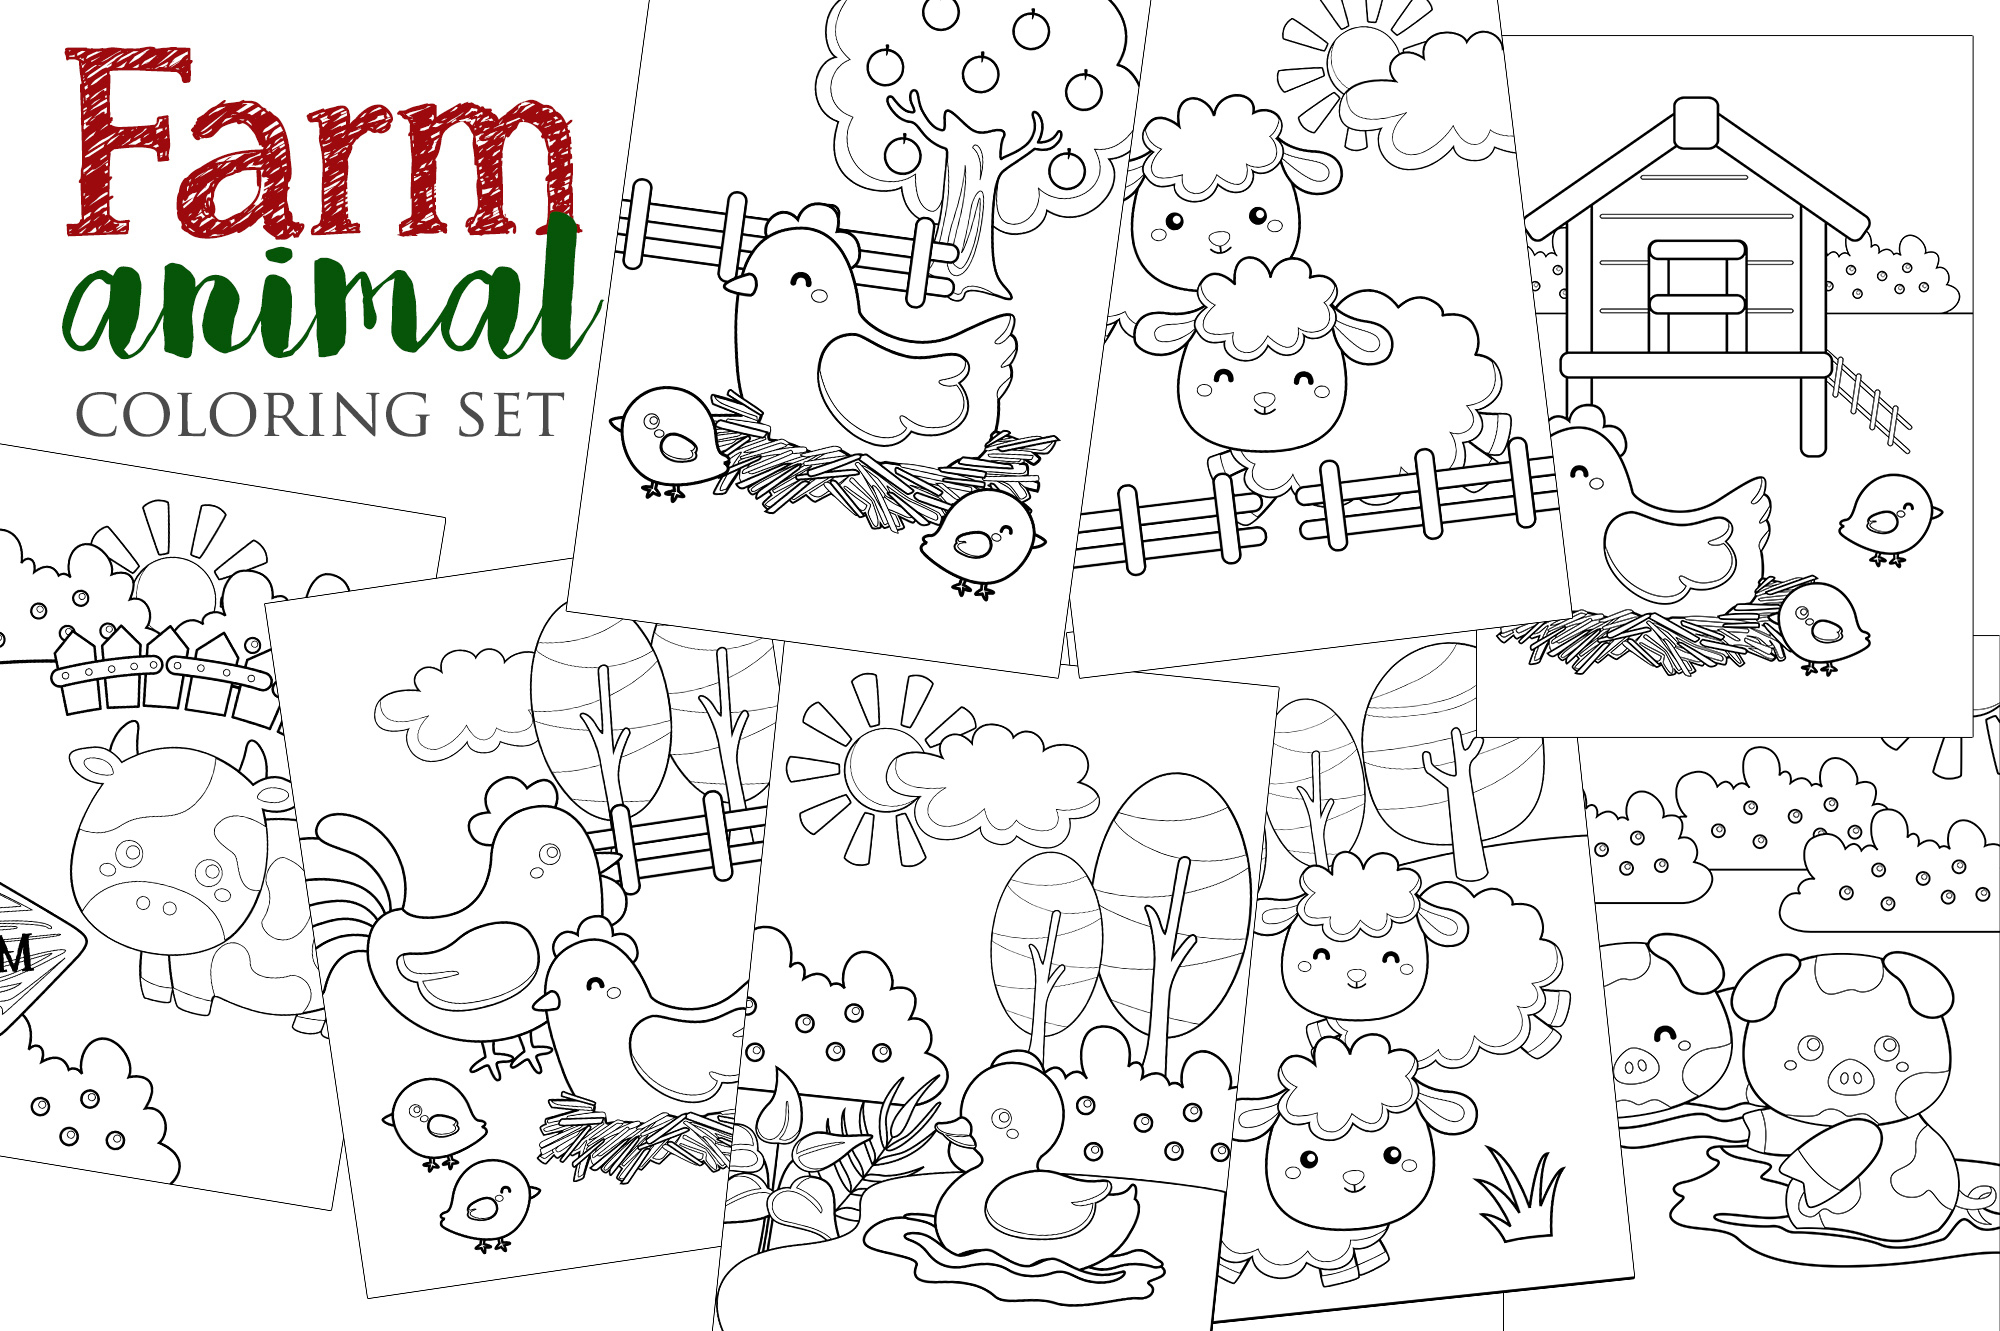 Farm animal coloring set with farm animals.